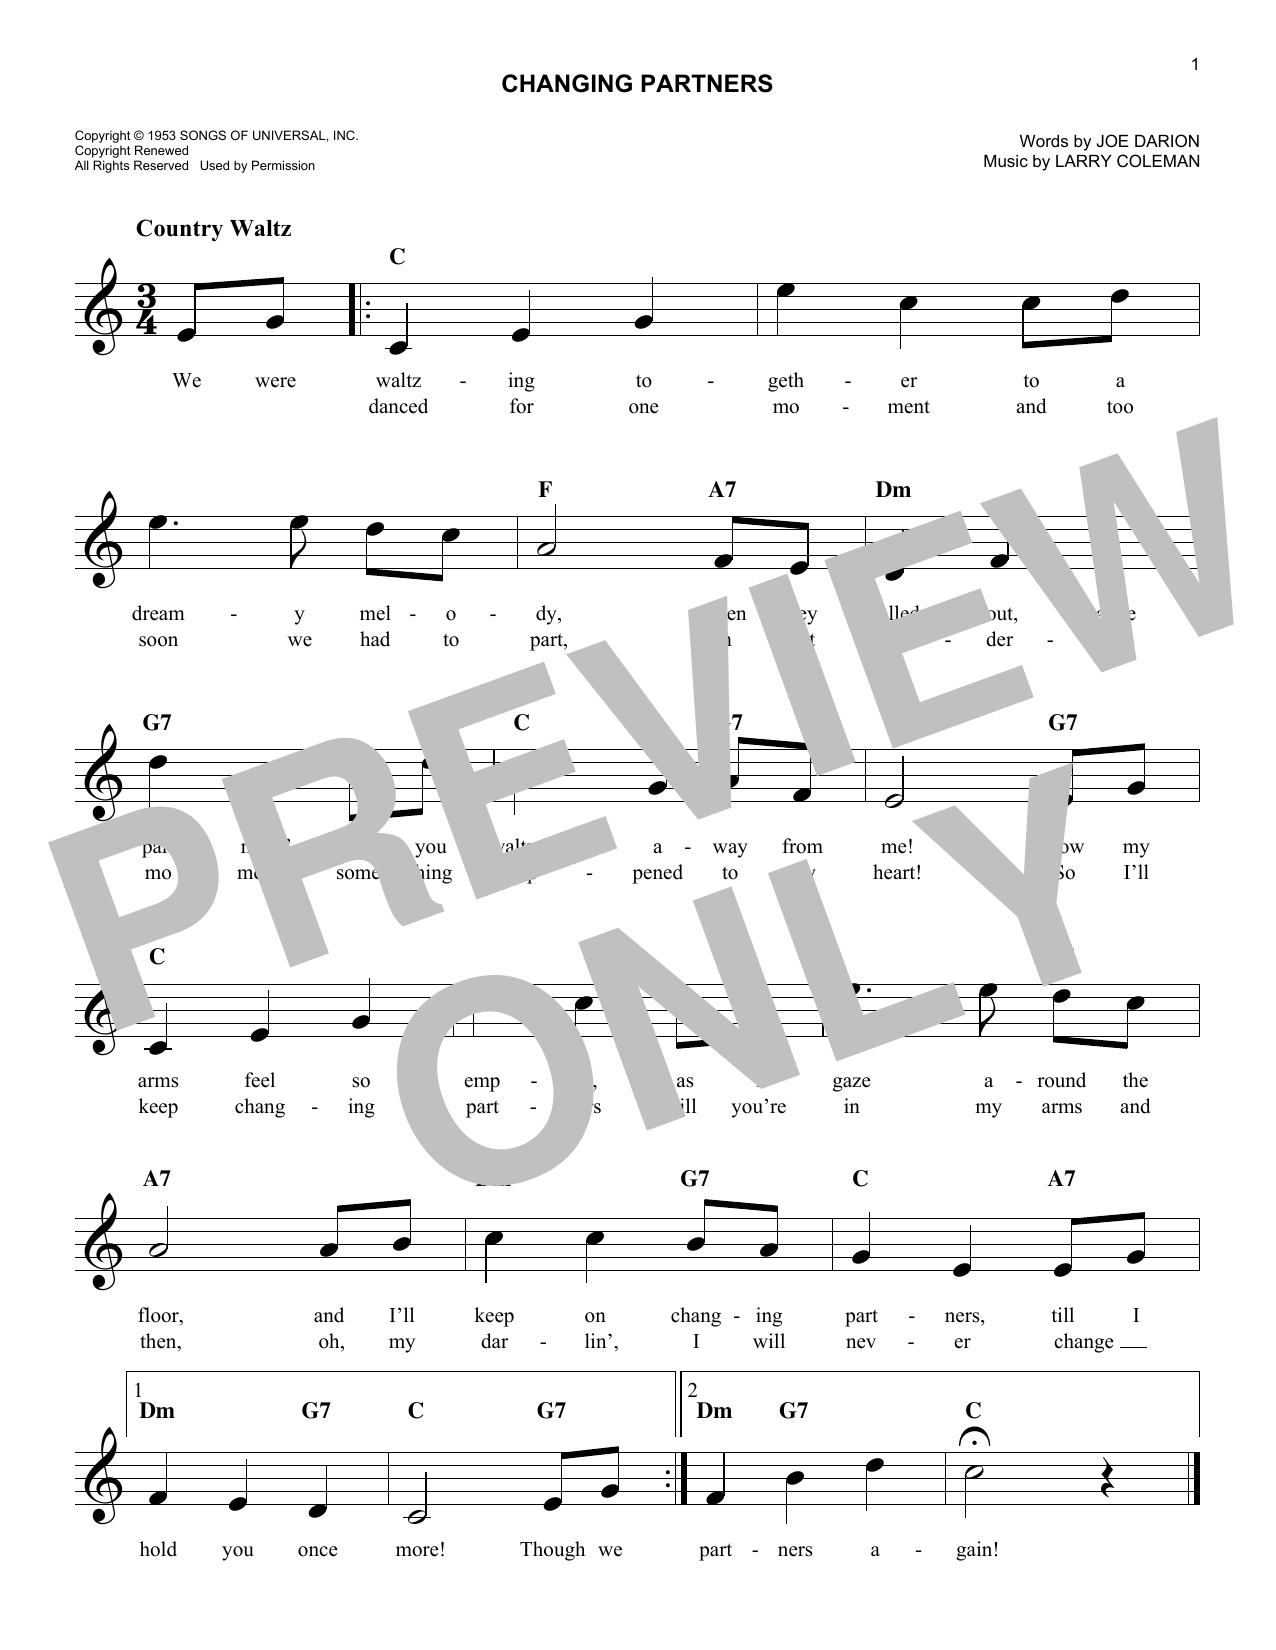 Joe Darion Changing Partners Sheet Music Notes & Chords for Melody Line, Lyrics & Chords - Download or Print PDF